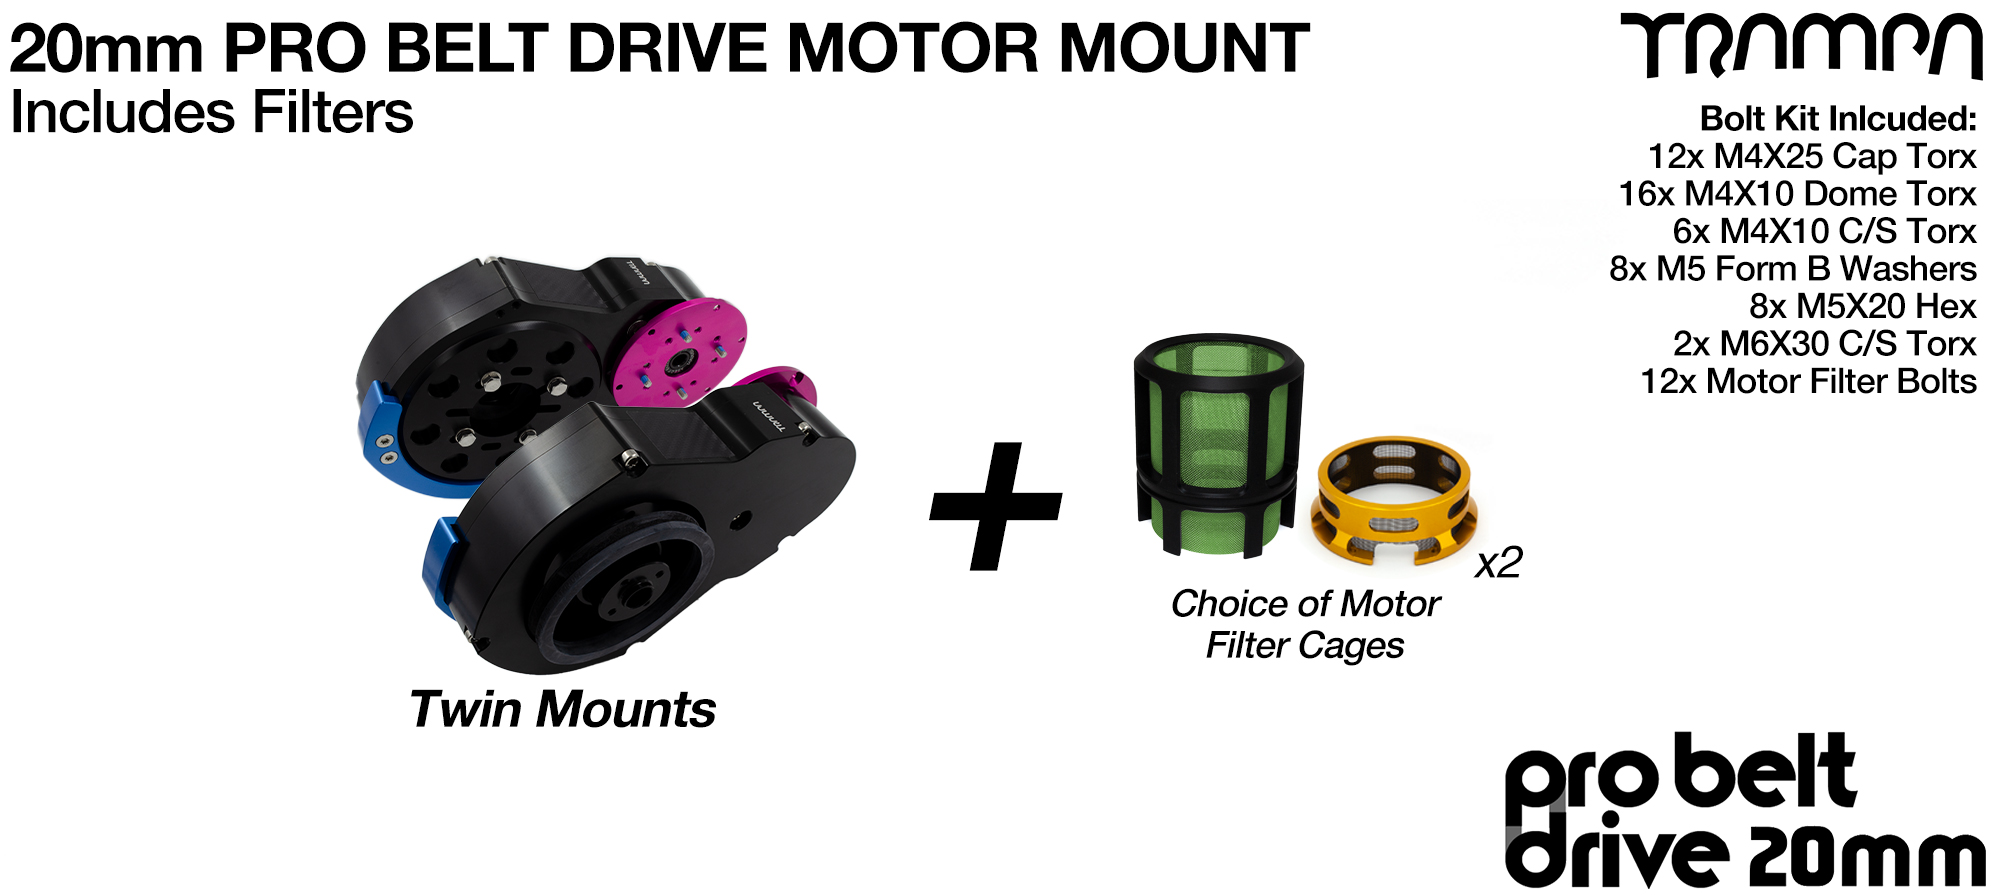 20mm PRO BELT DRIVE Motor Mounts with FILTERS - NO Pulleys & NO Motors